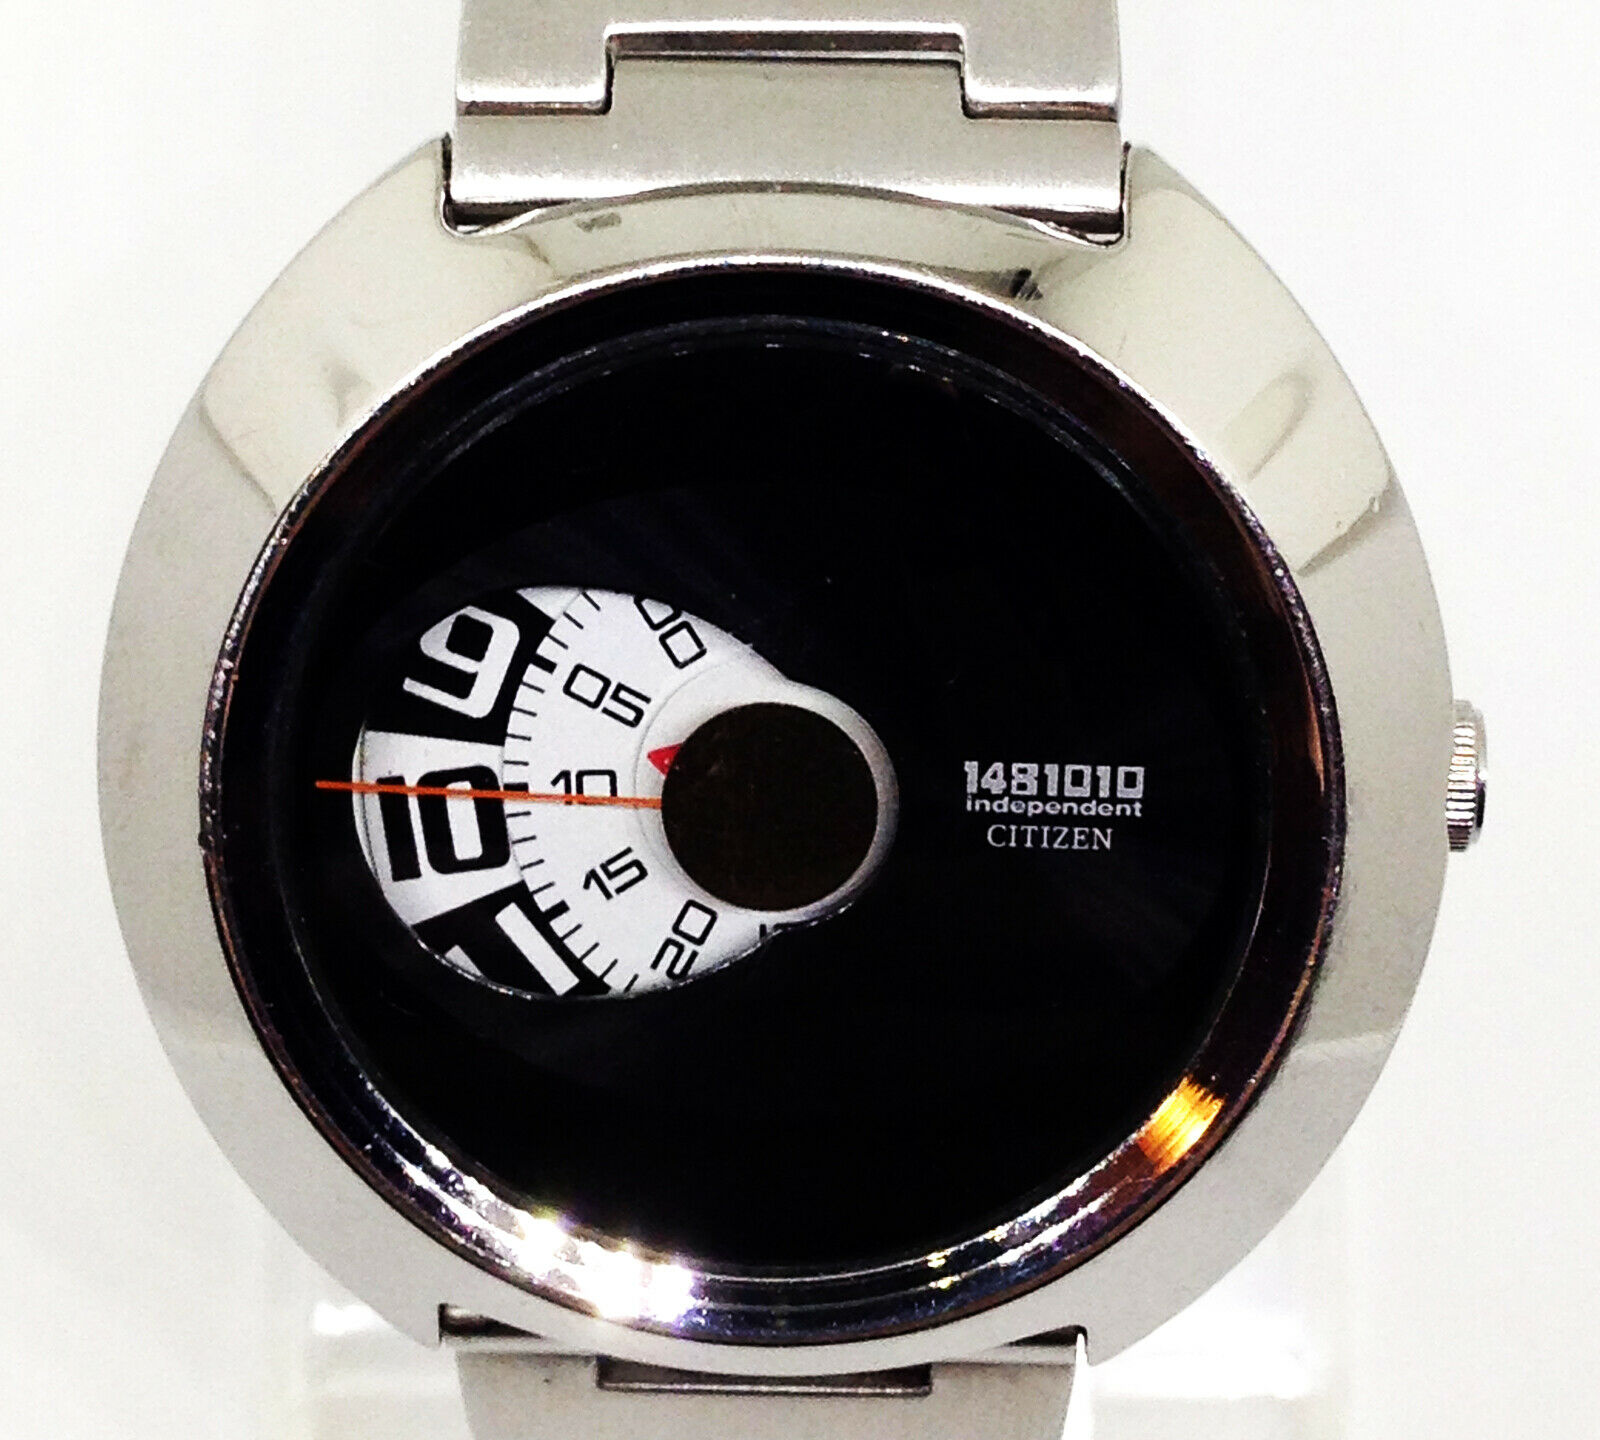 Vintage Men's CITIZEN Independent 1481010 Quartz Watch. 39mm Case